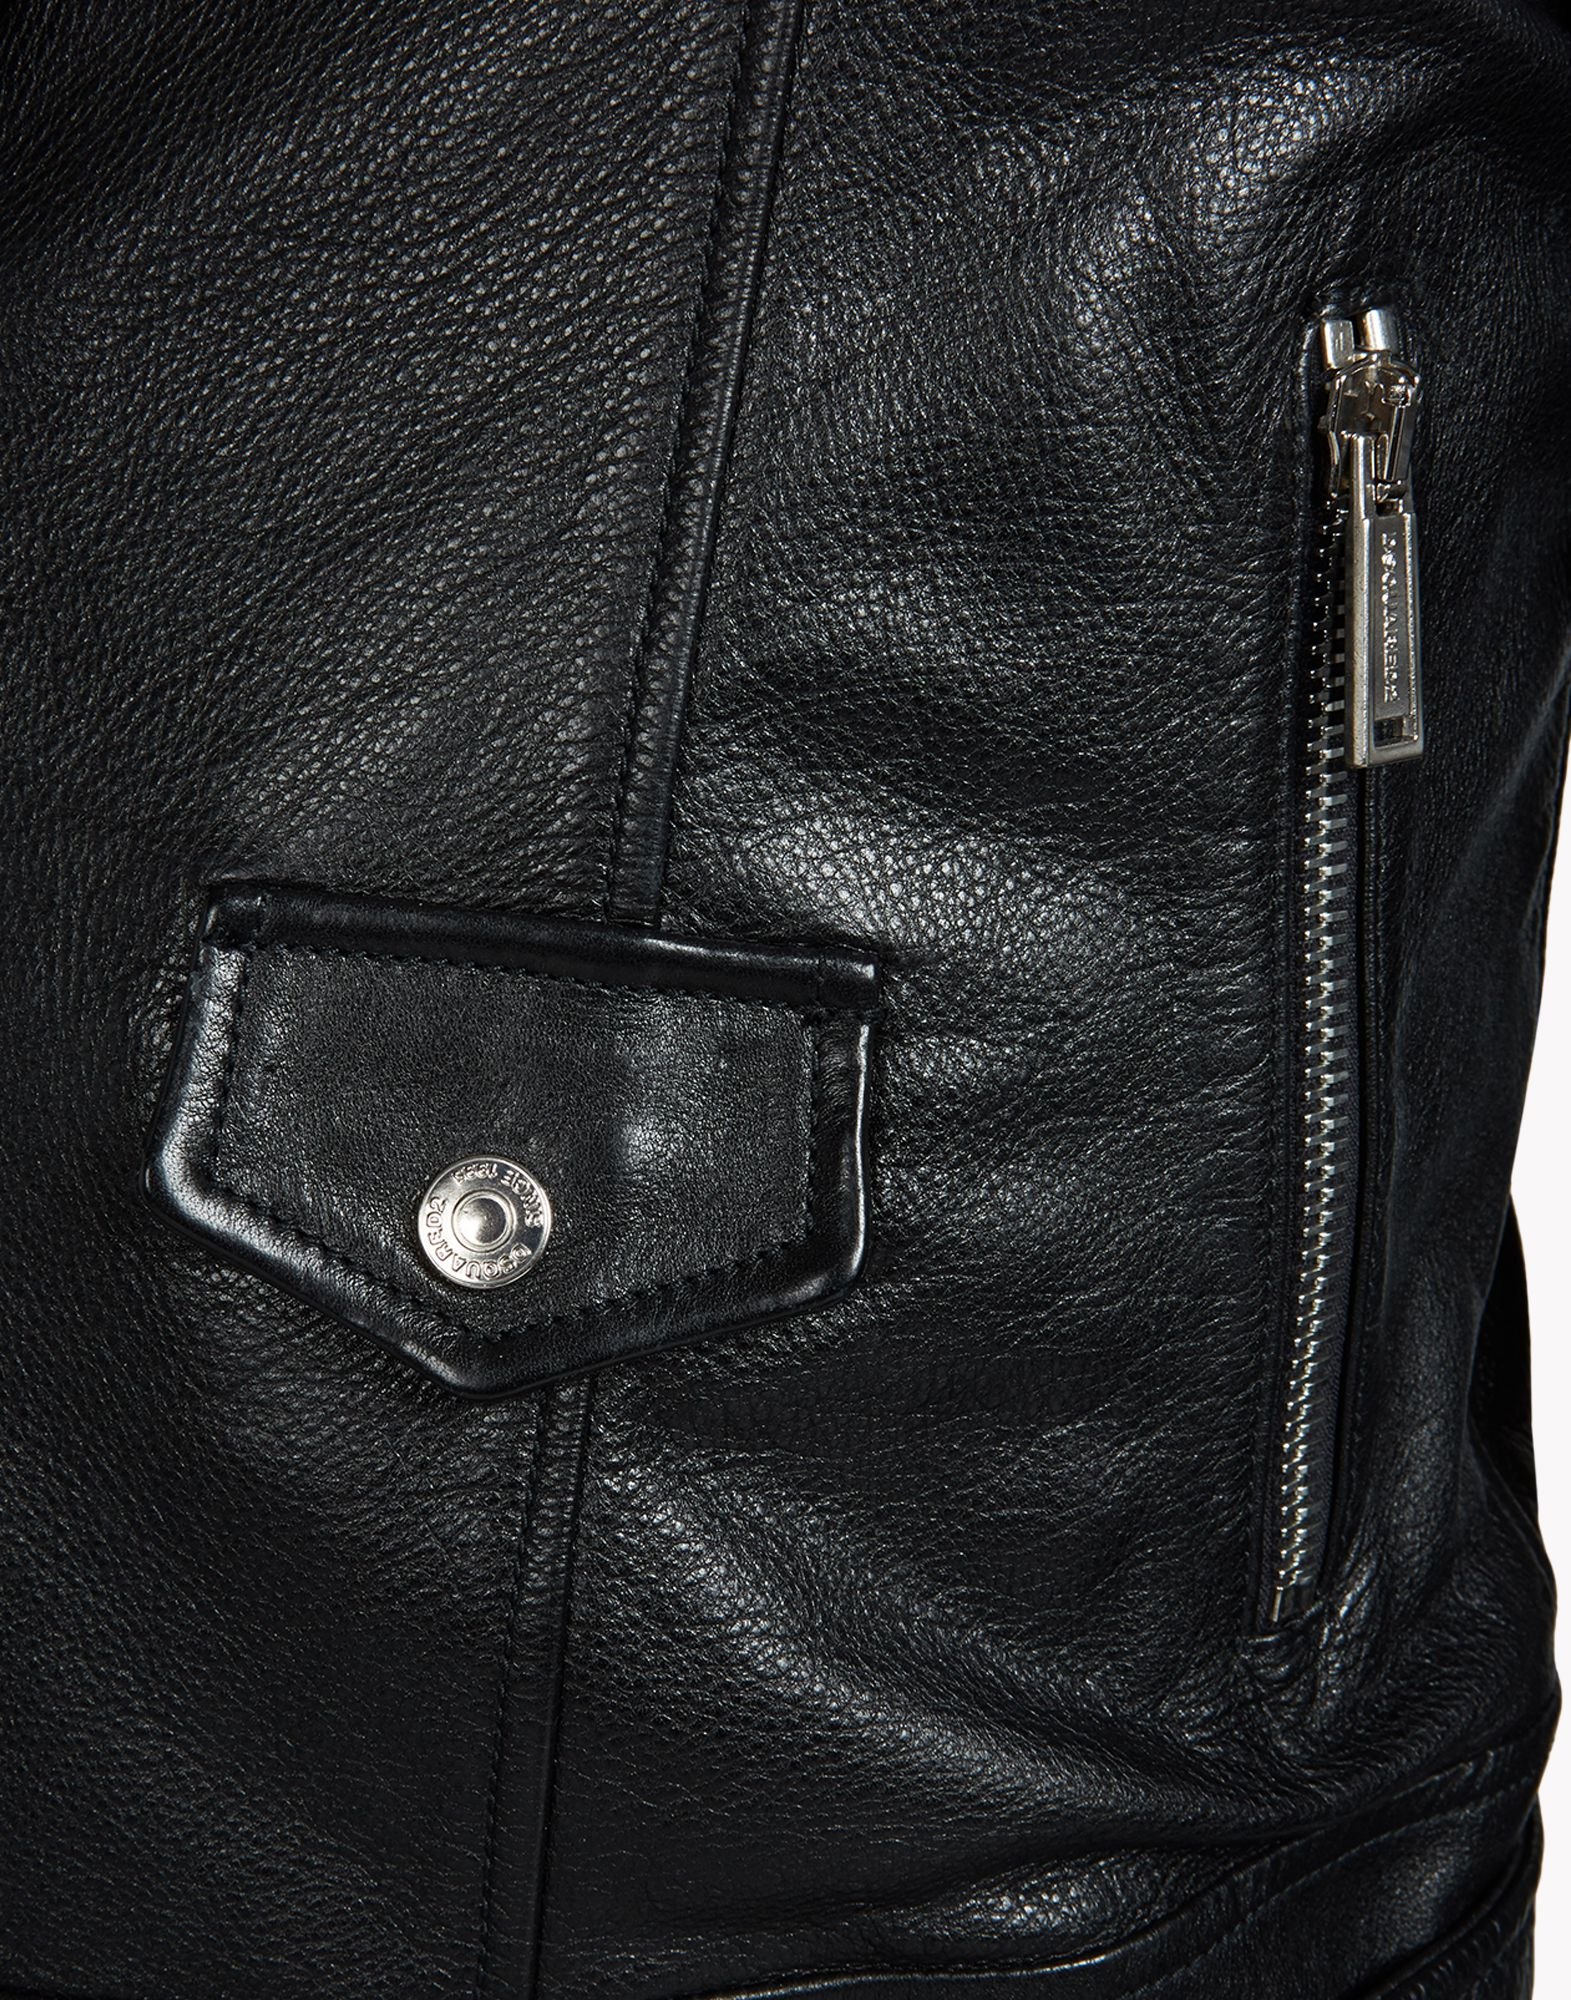 Lyst - Dsquared² Rockstar Leather Jacket in Black for Men